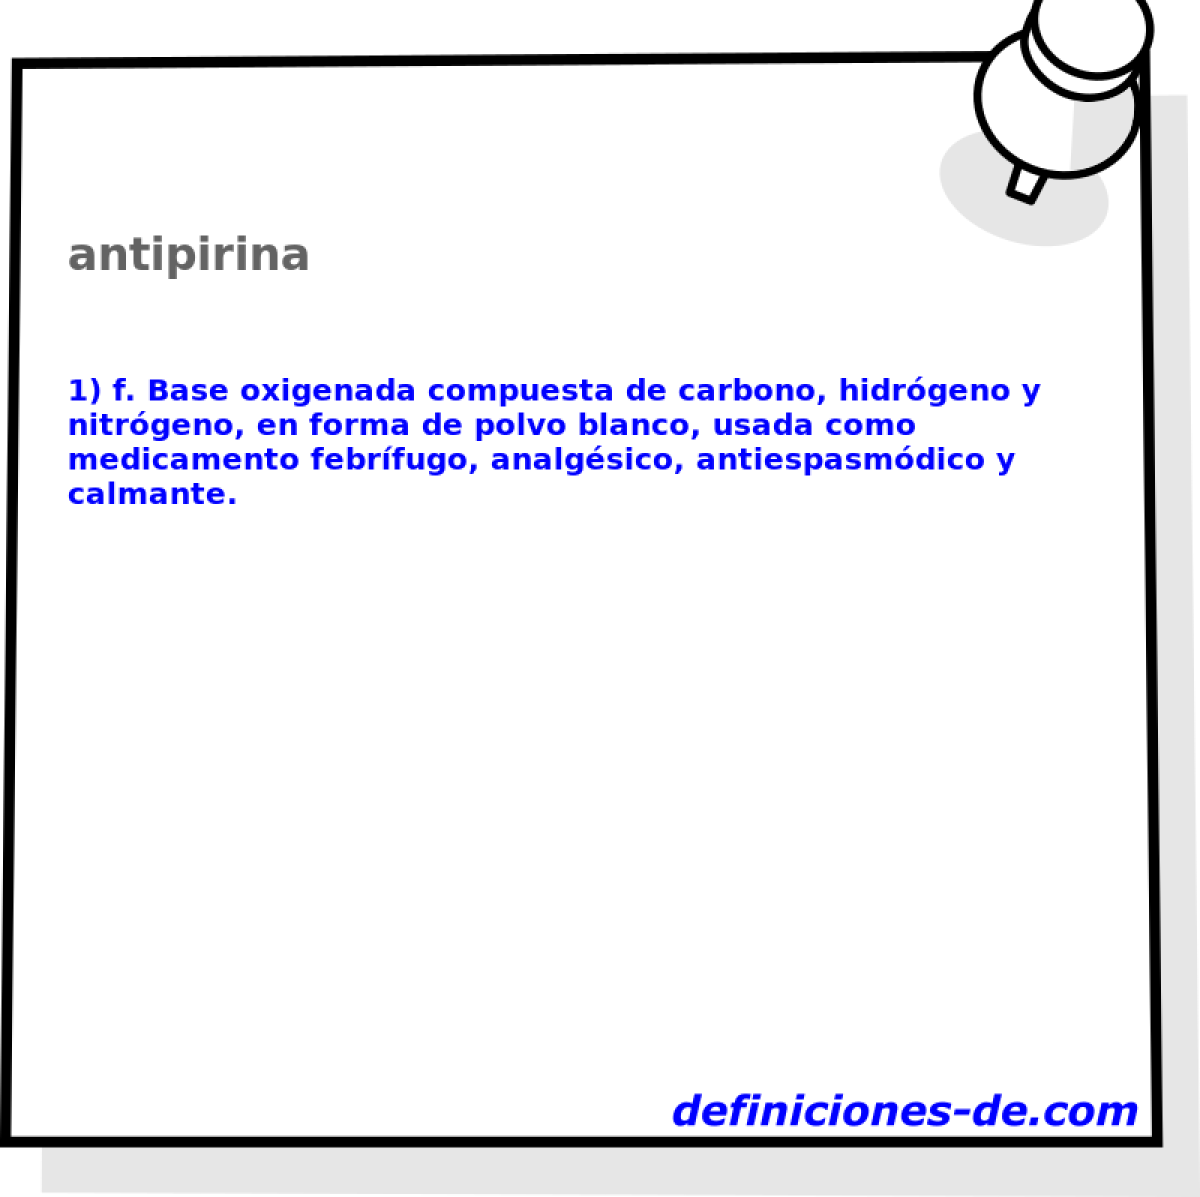 antipirina 